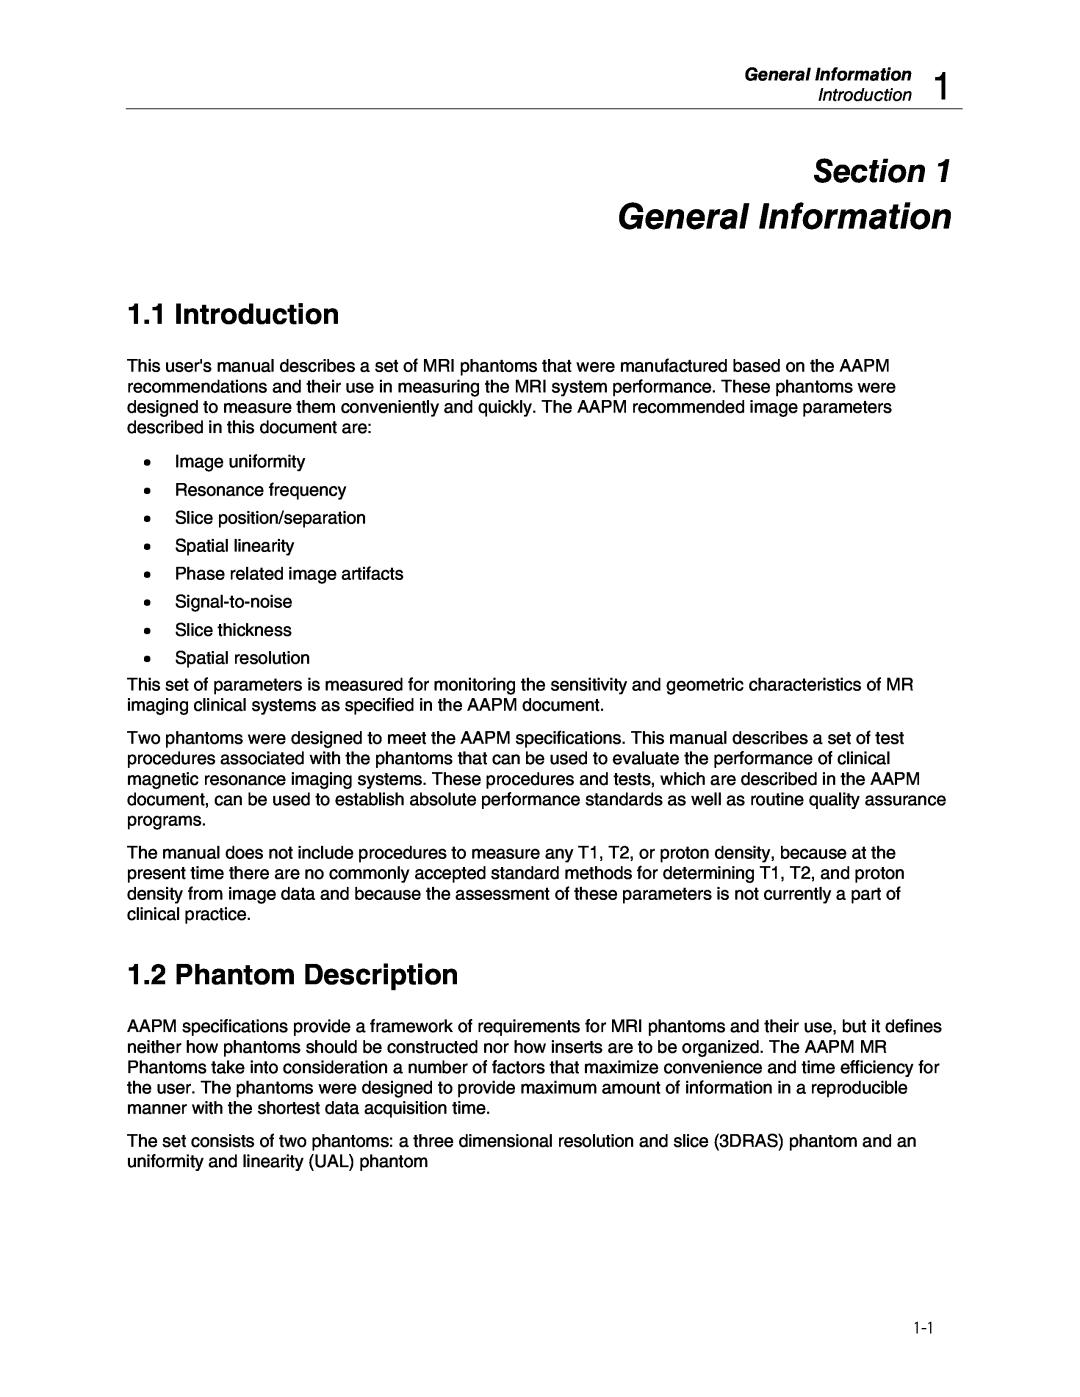 Fluke 76-907, 76-908 user manual General Information, Section, Introduction, Phantom Description 